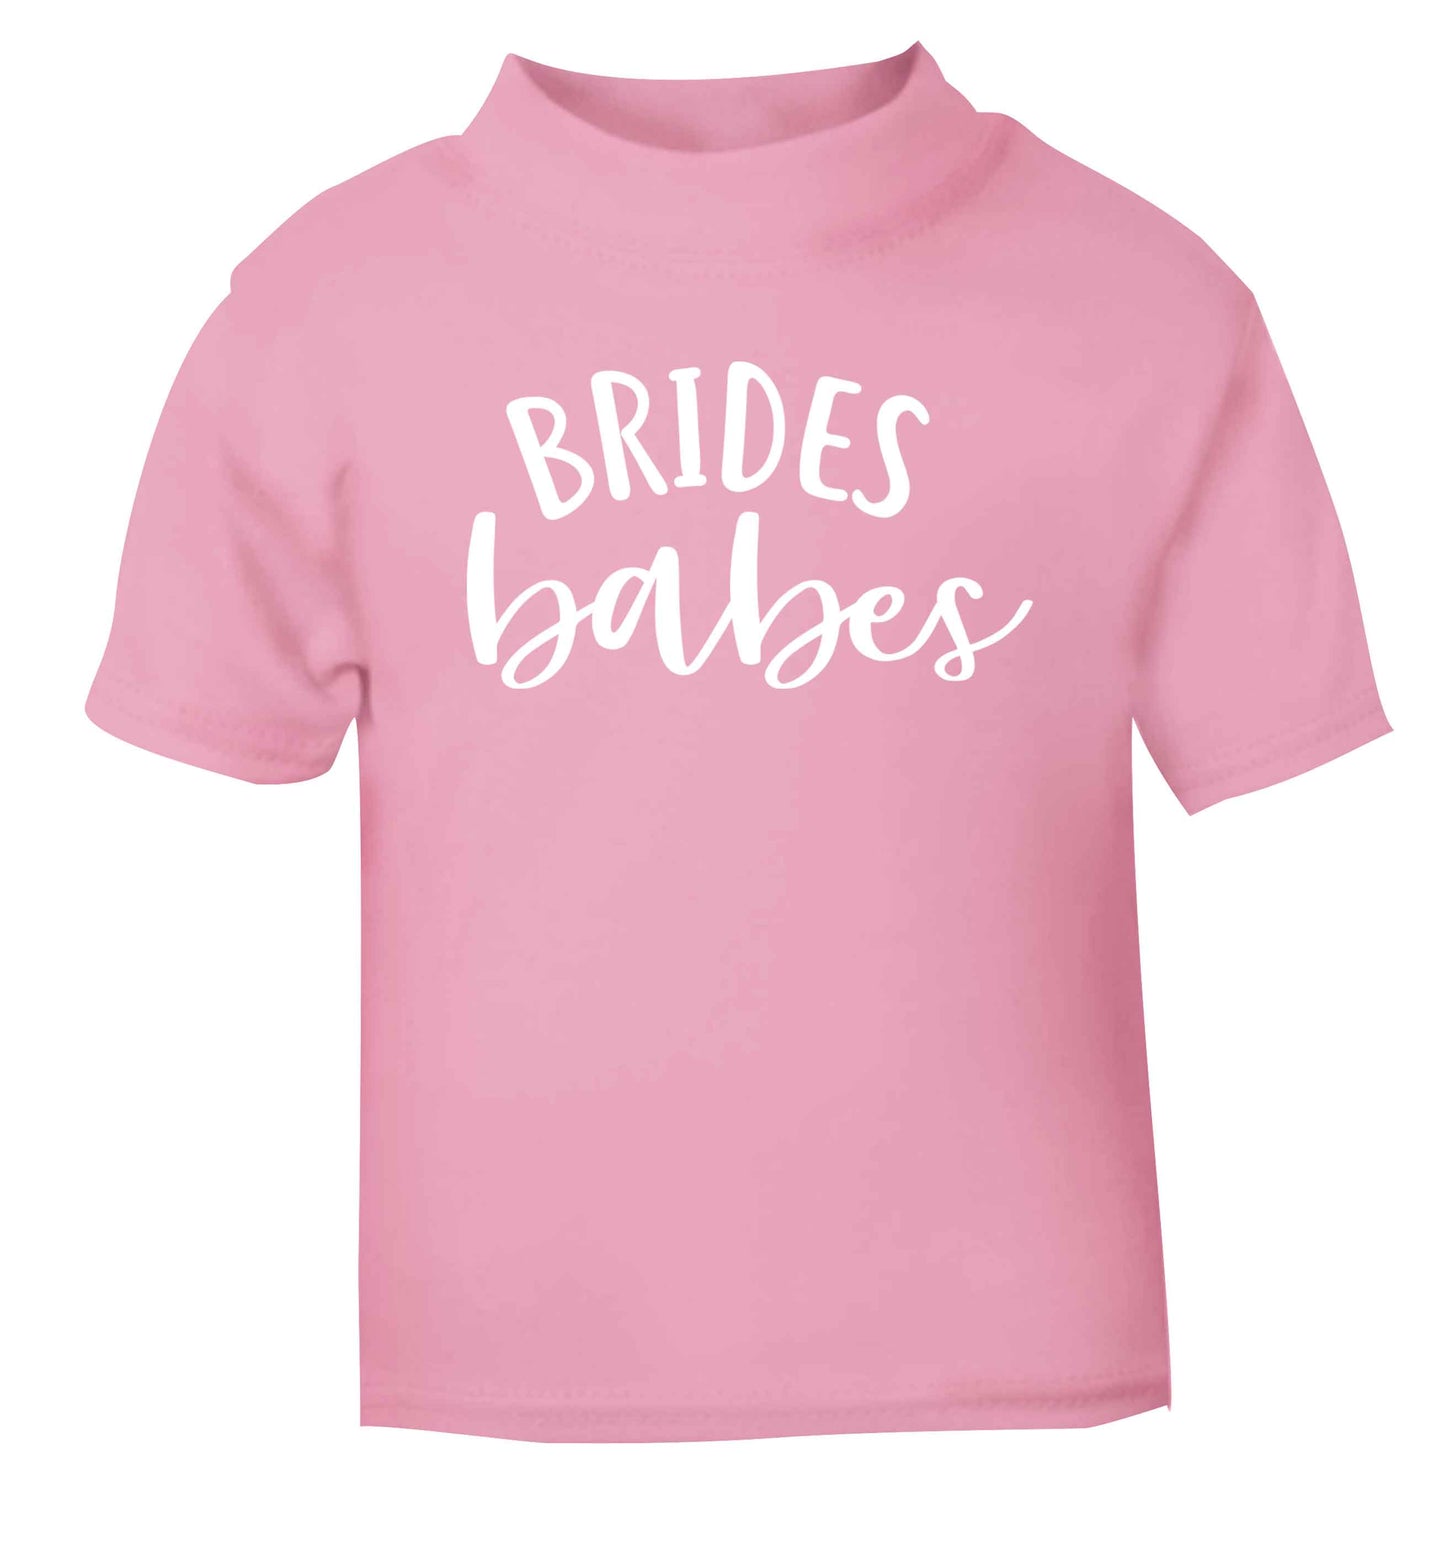 Brides Babes light pink Baby Toddler Tshirt 2 Years